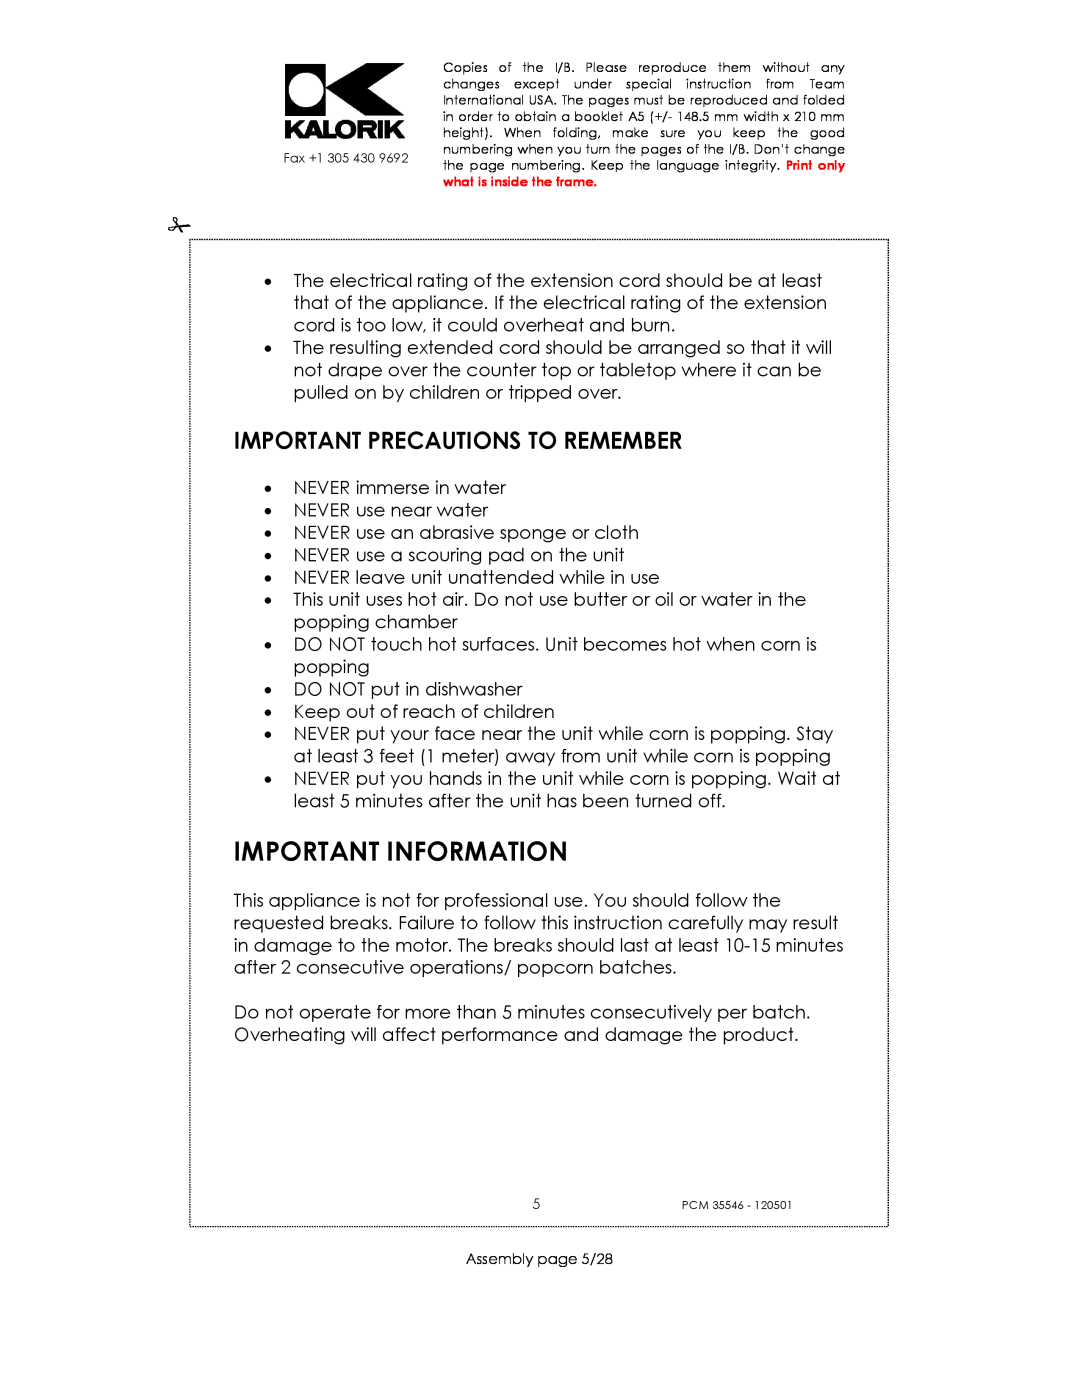 Kalorik PCM 35546 manual Important Information, Important Precautions To Remember 